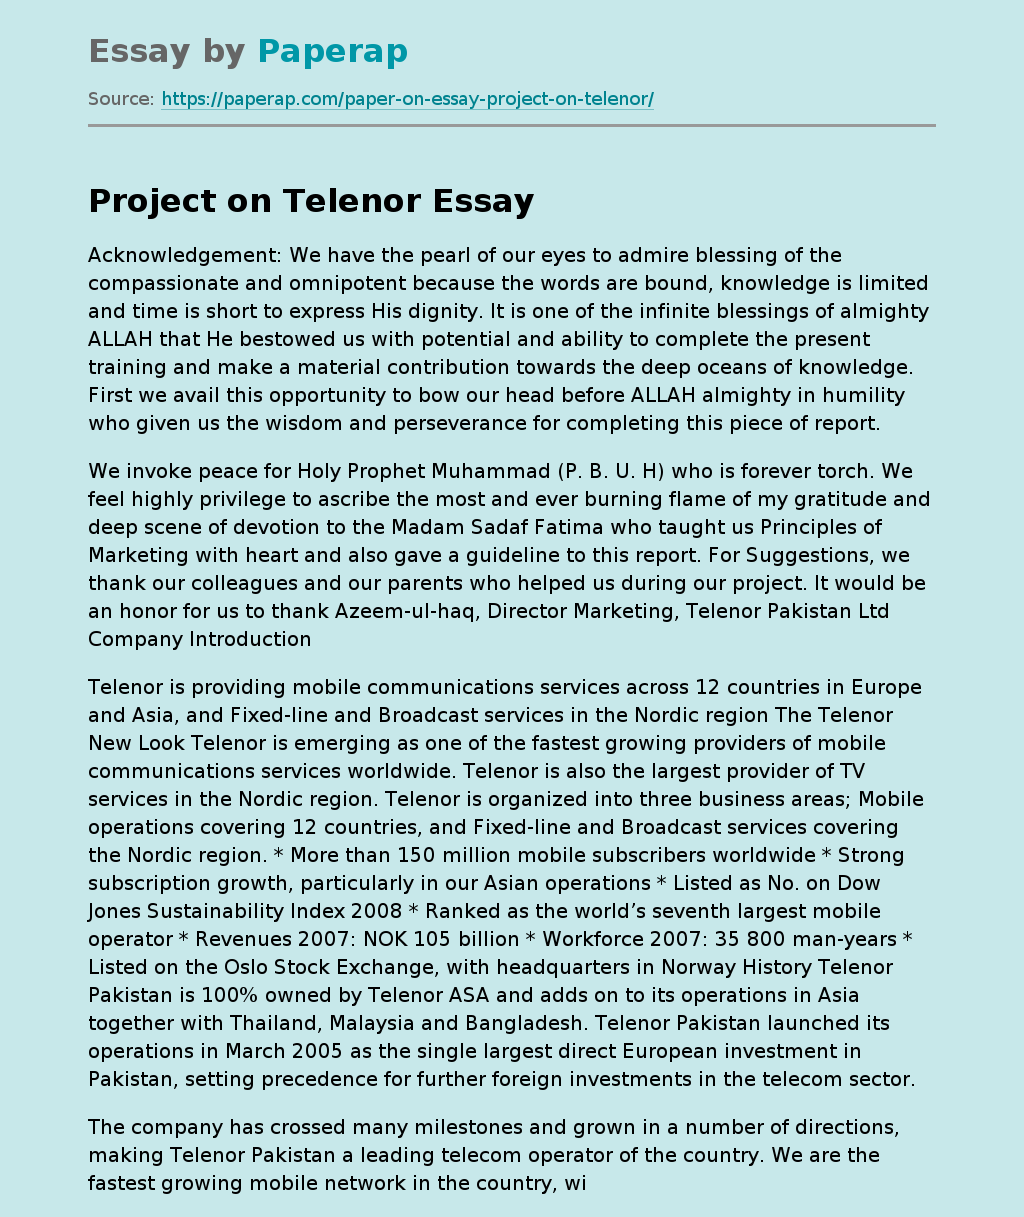 Project on Telenor